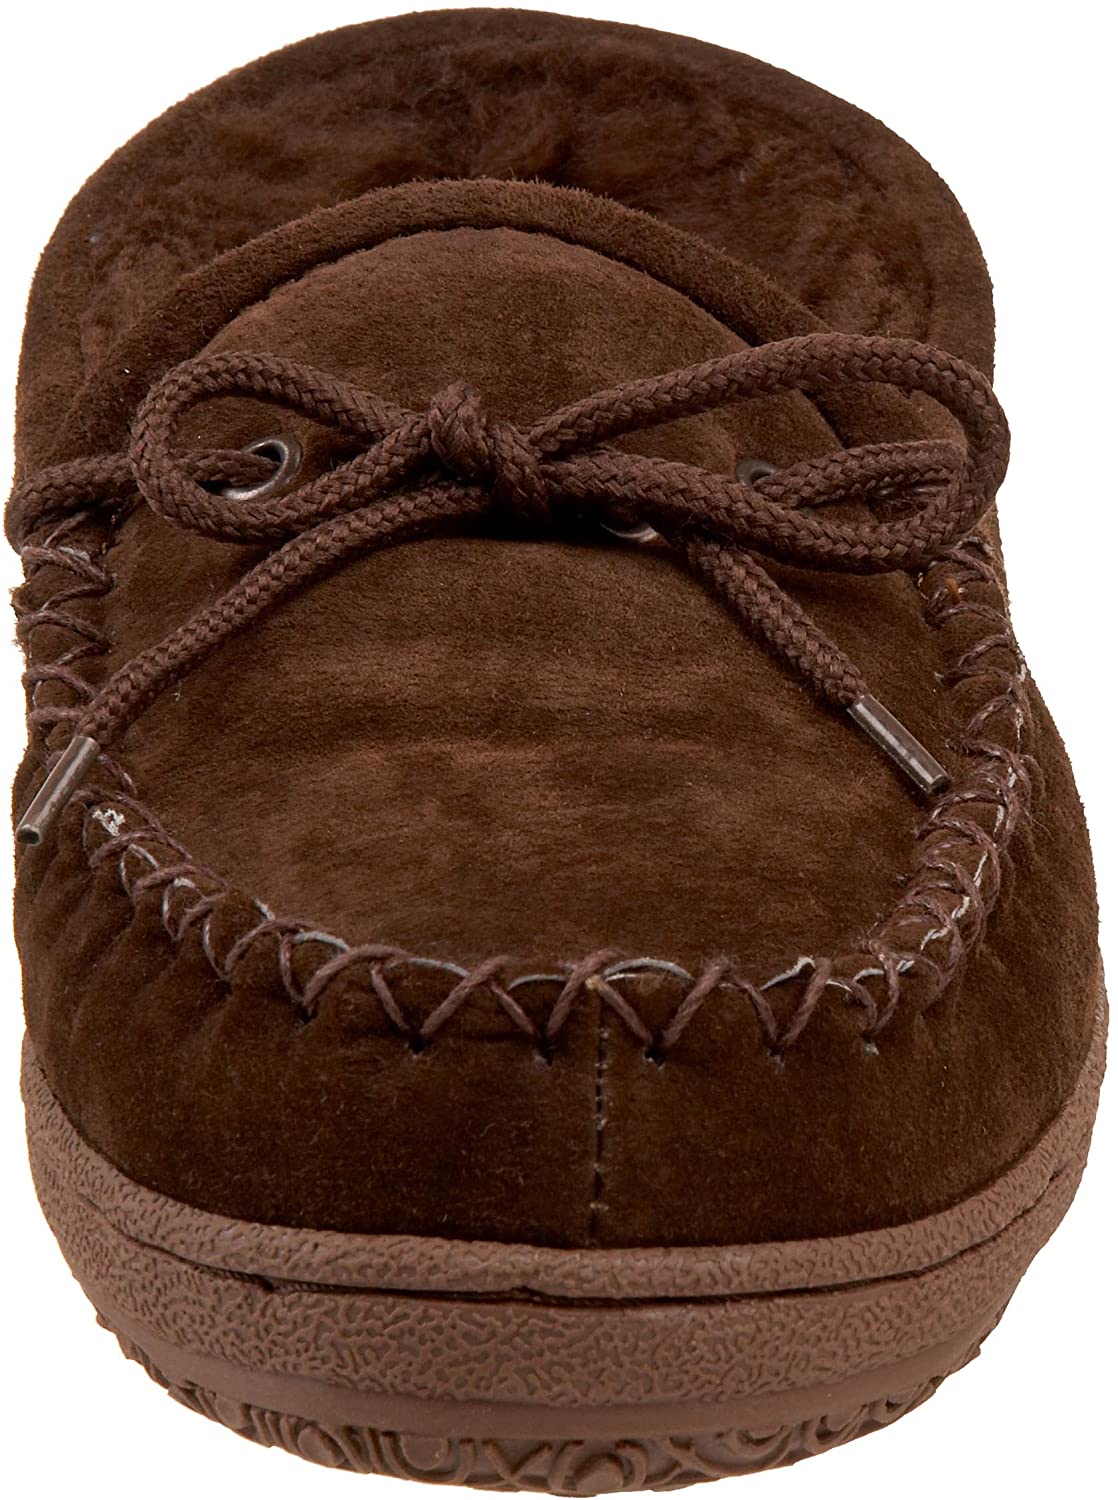 Old Friend Footwear Women's Brown Loafer Moccasin 481166-L (6) - image 2 of 7